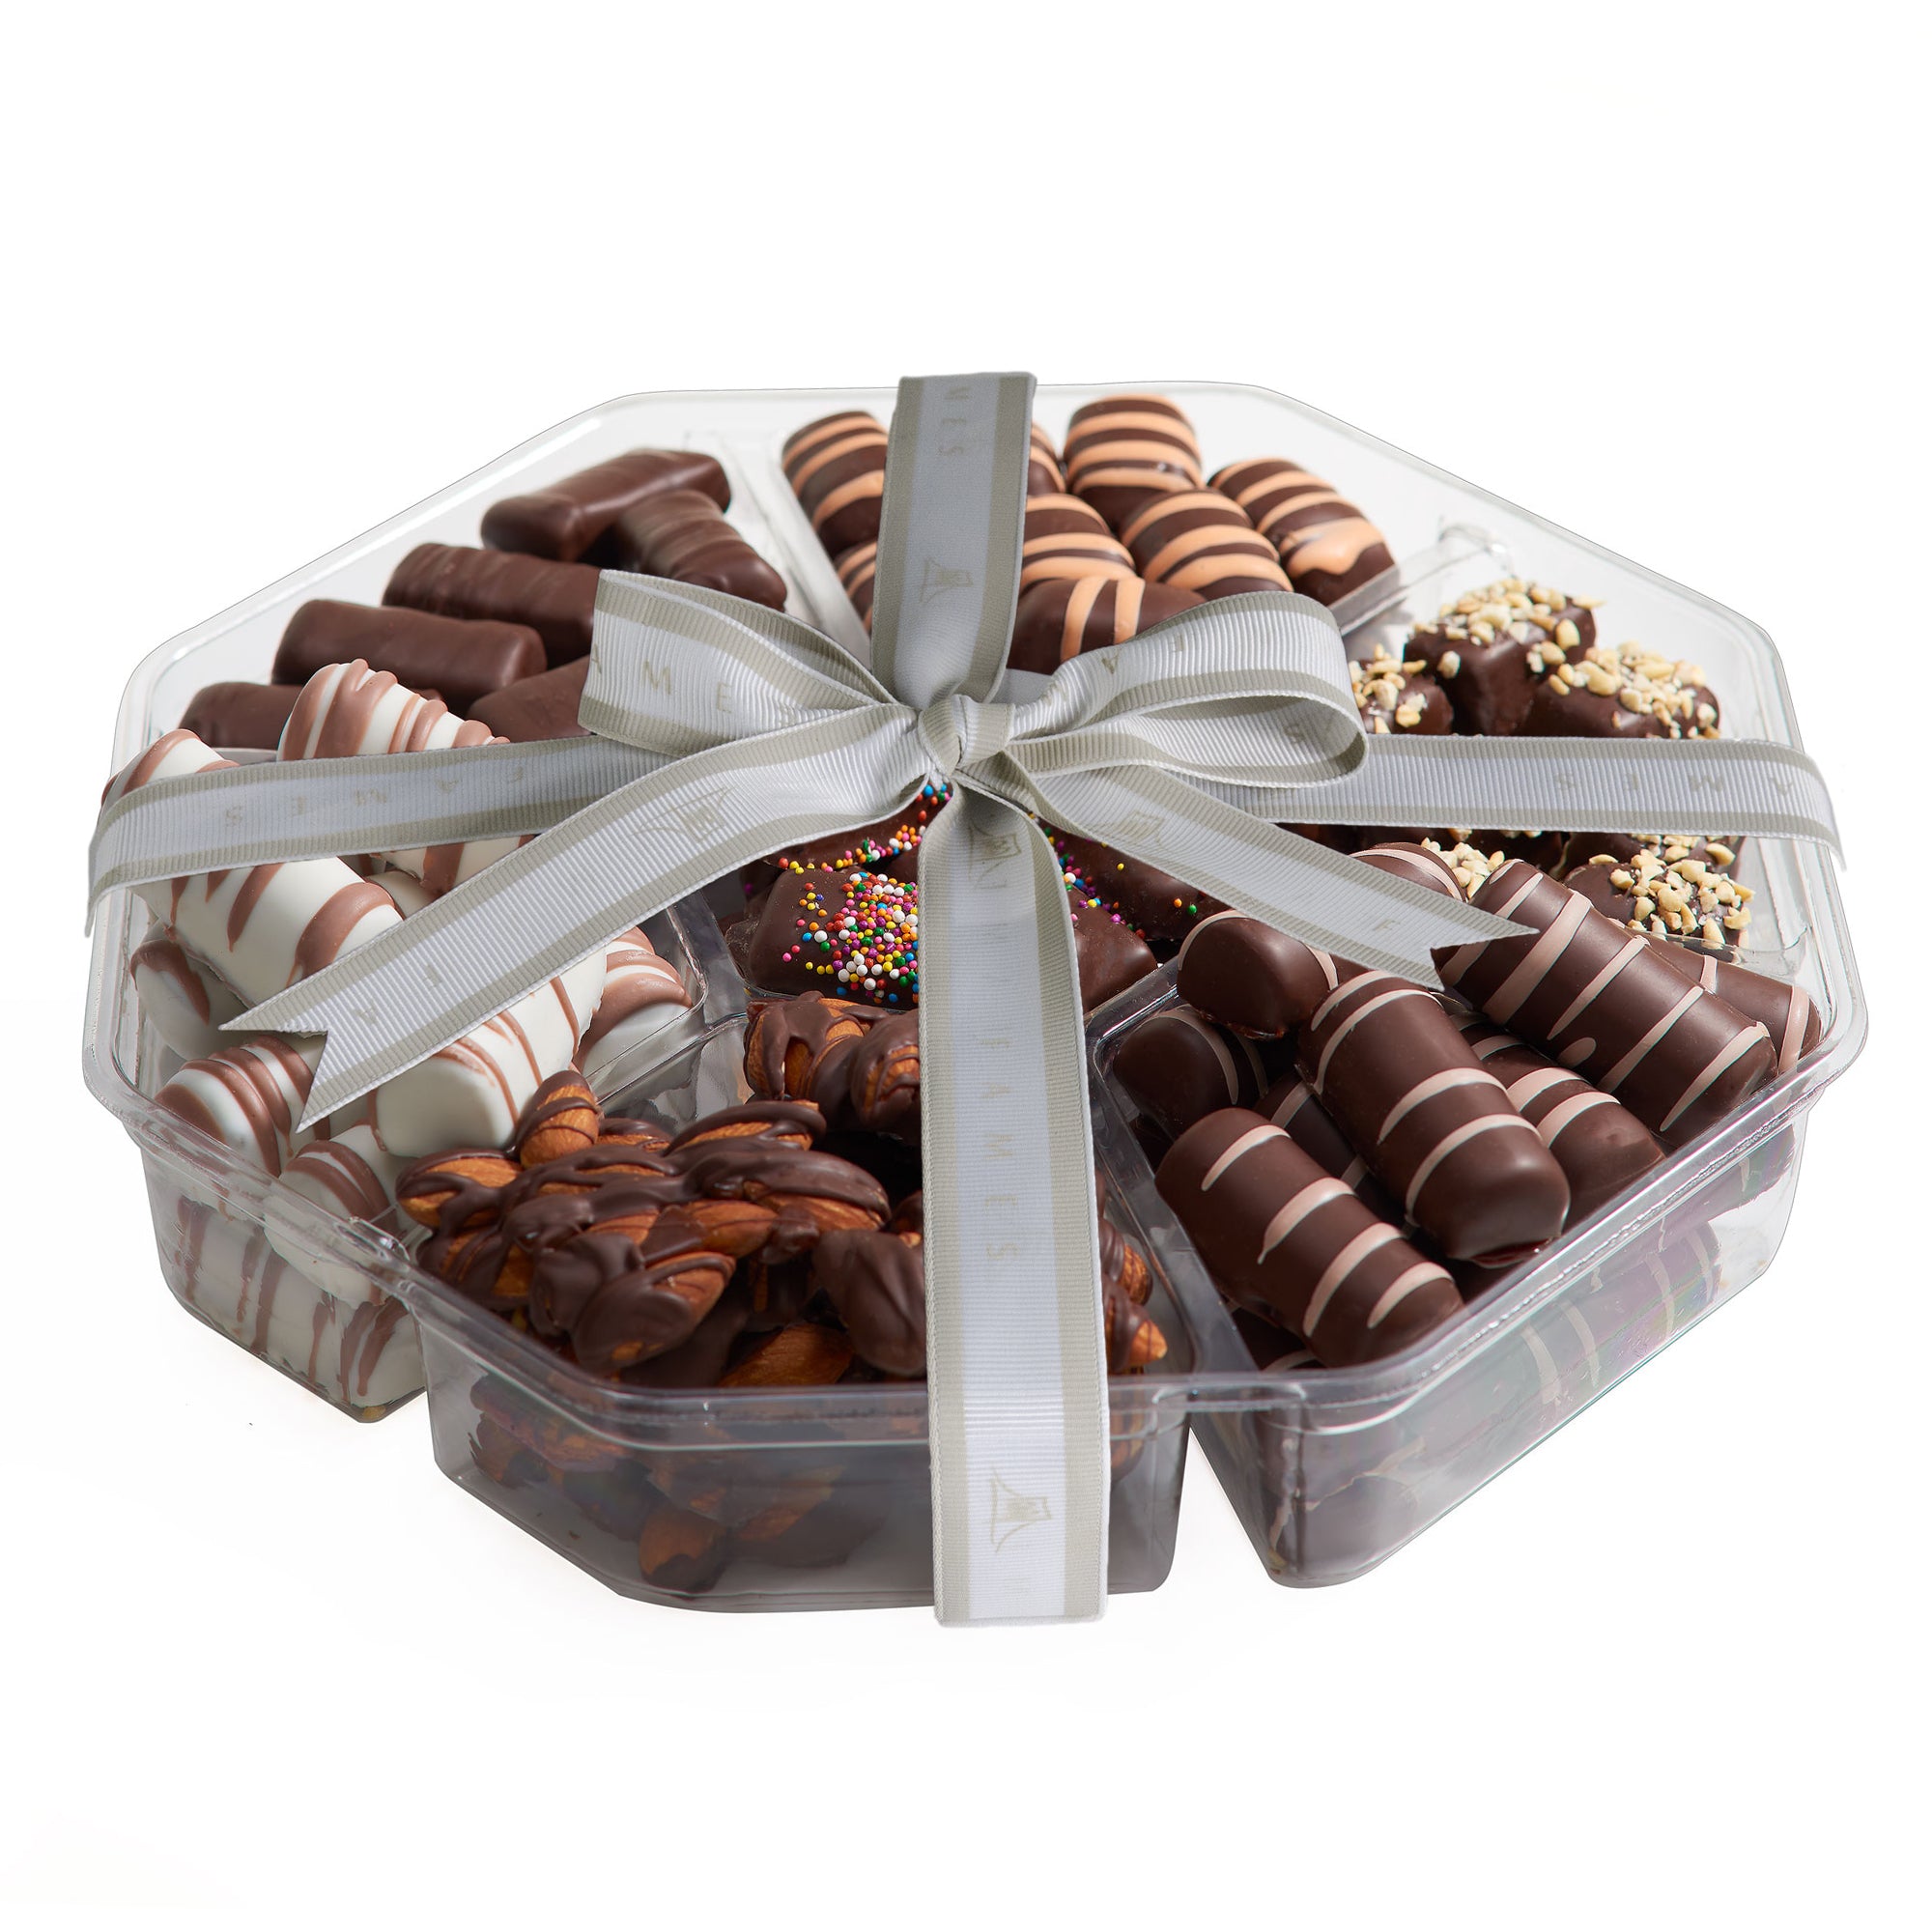 The Ultimate Chocolate Gift Basket | Uncommon Goods